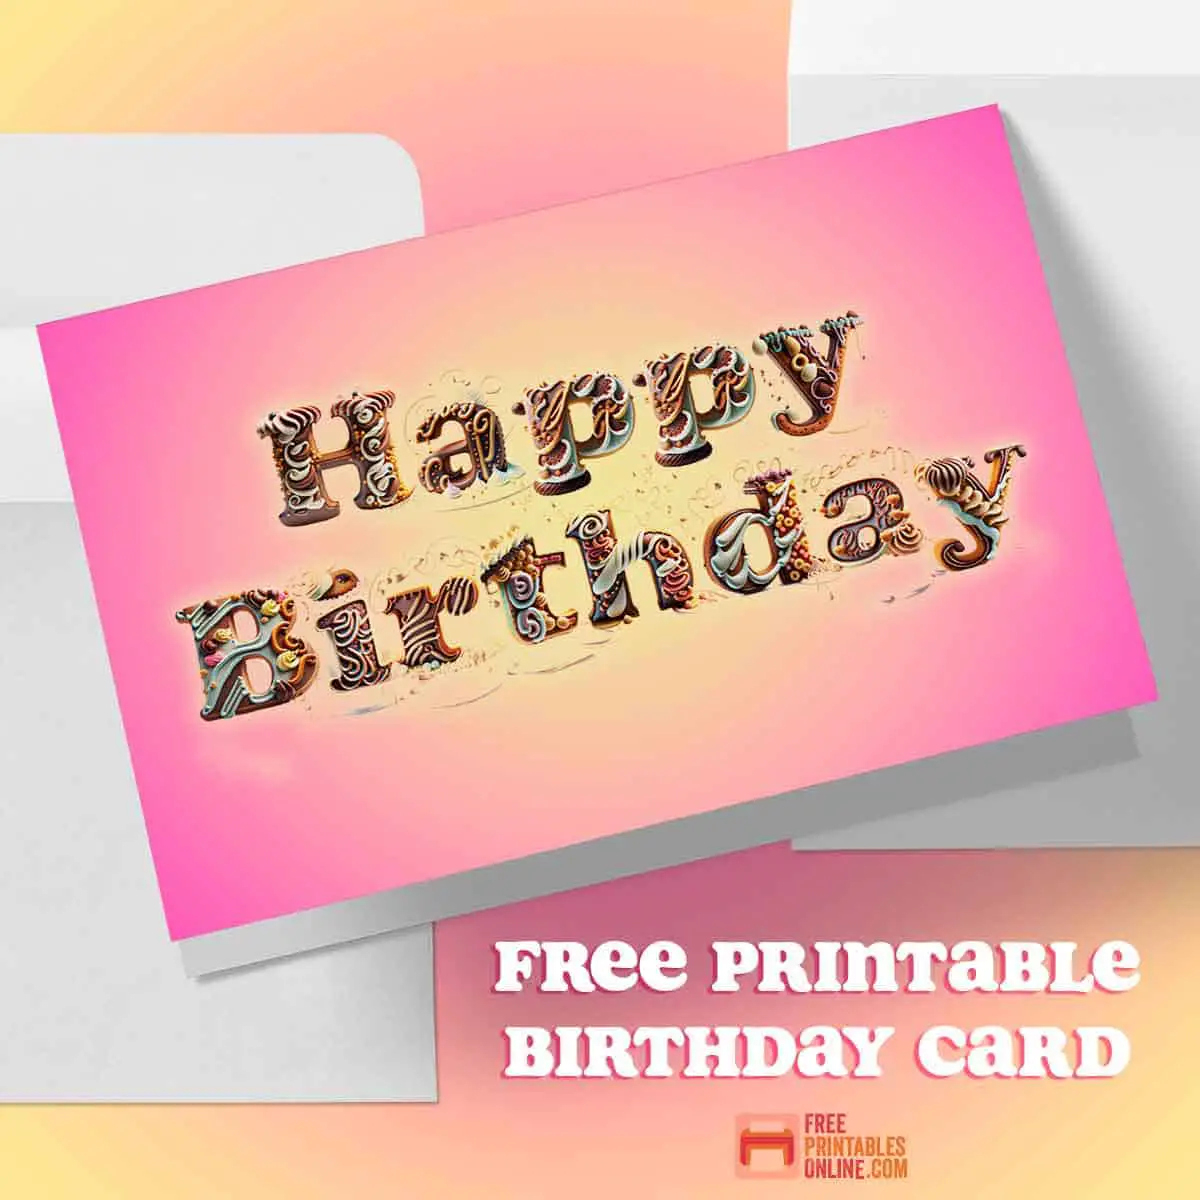 Birthday Cake Happy Birthday Card - Free Printables Online with regard to Free Online Printable Birthday Cards